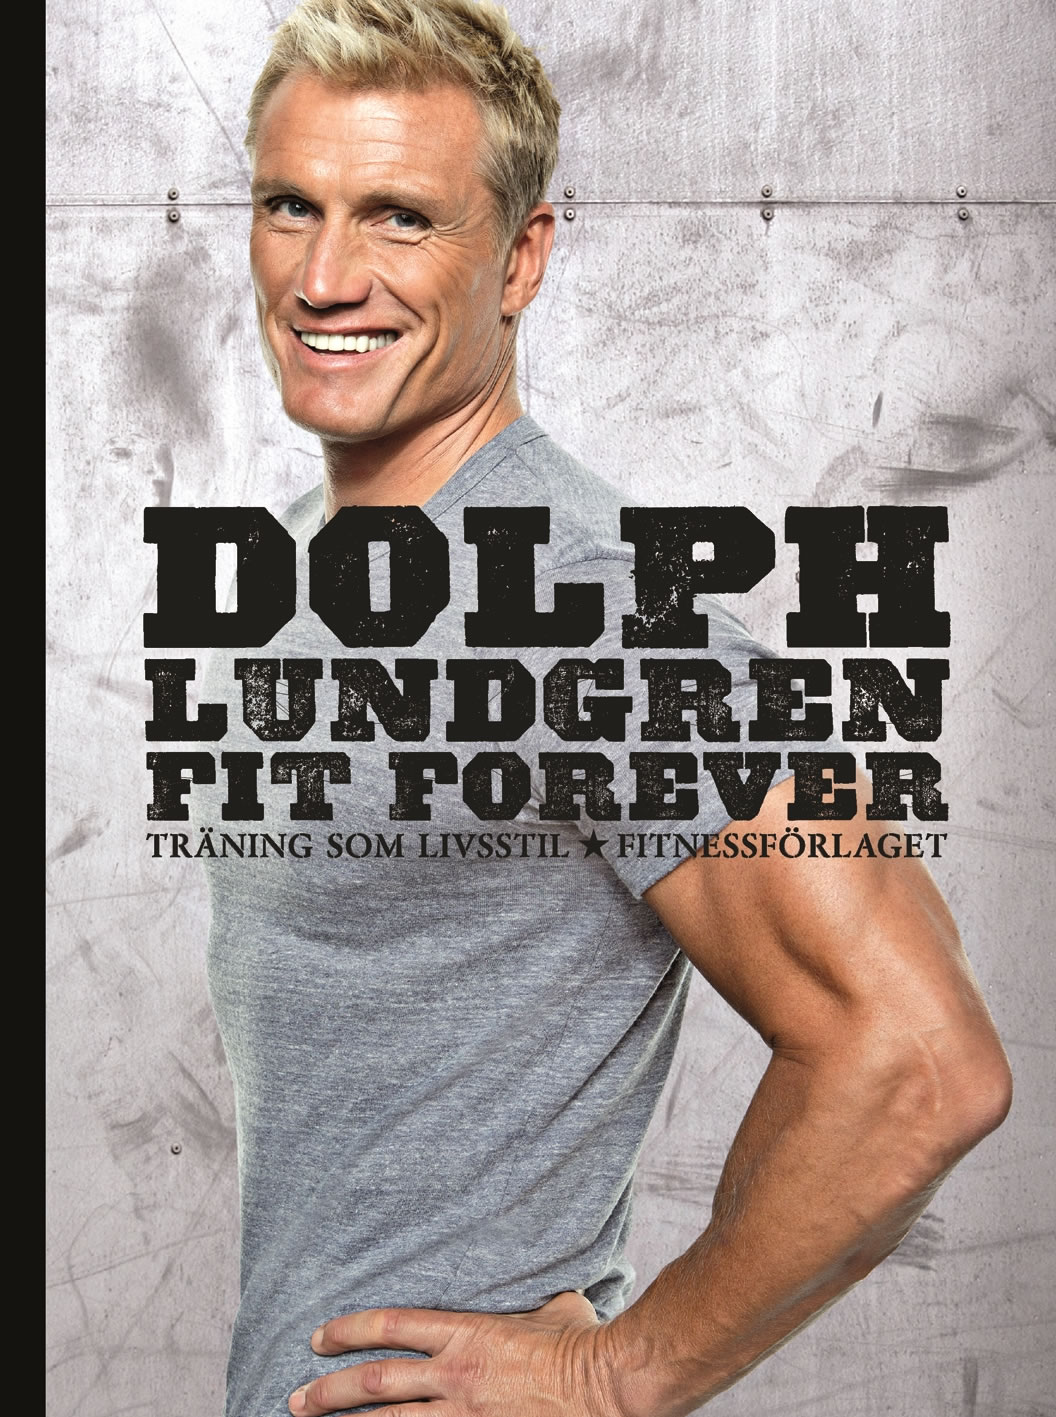 Dolph lundgren fit forever 2011